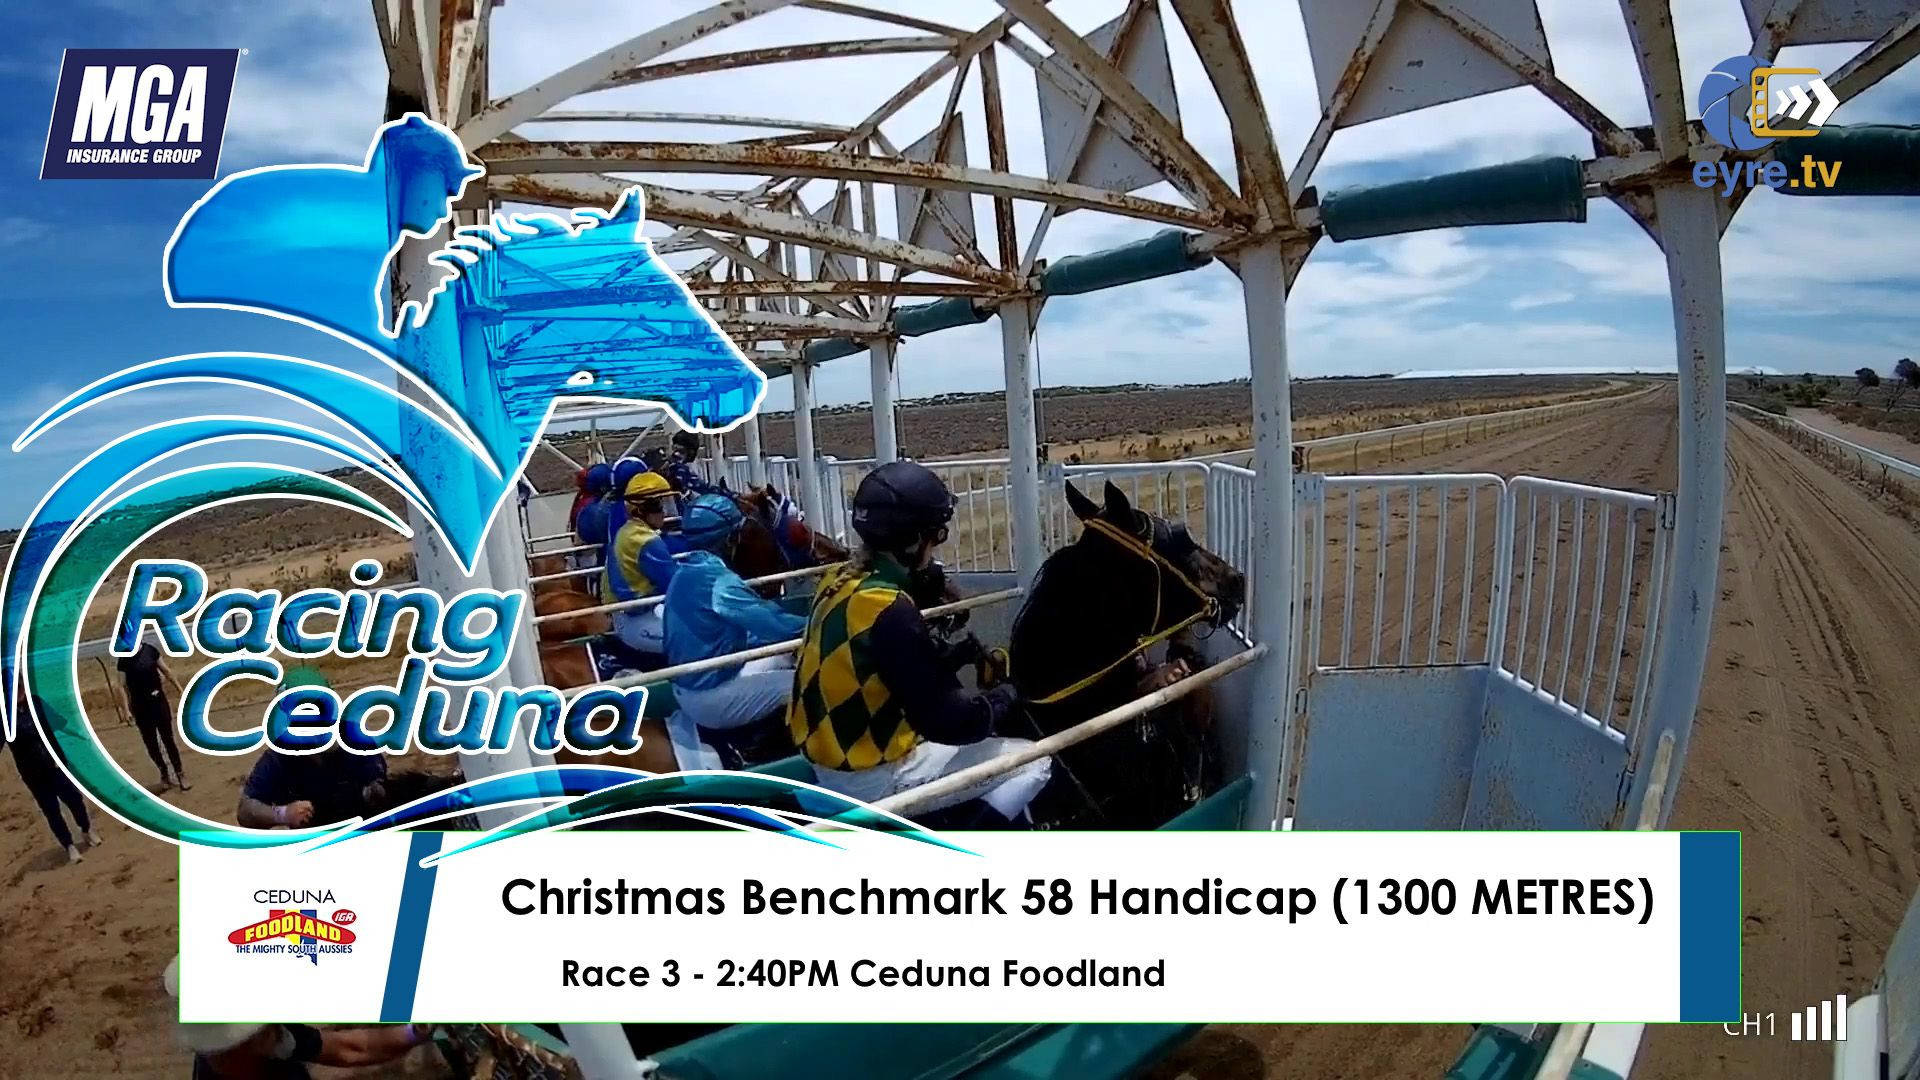 Ceduna Christmas Races - Race 3. Benchmark 58 Handicap (1300 METRES)